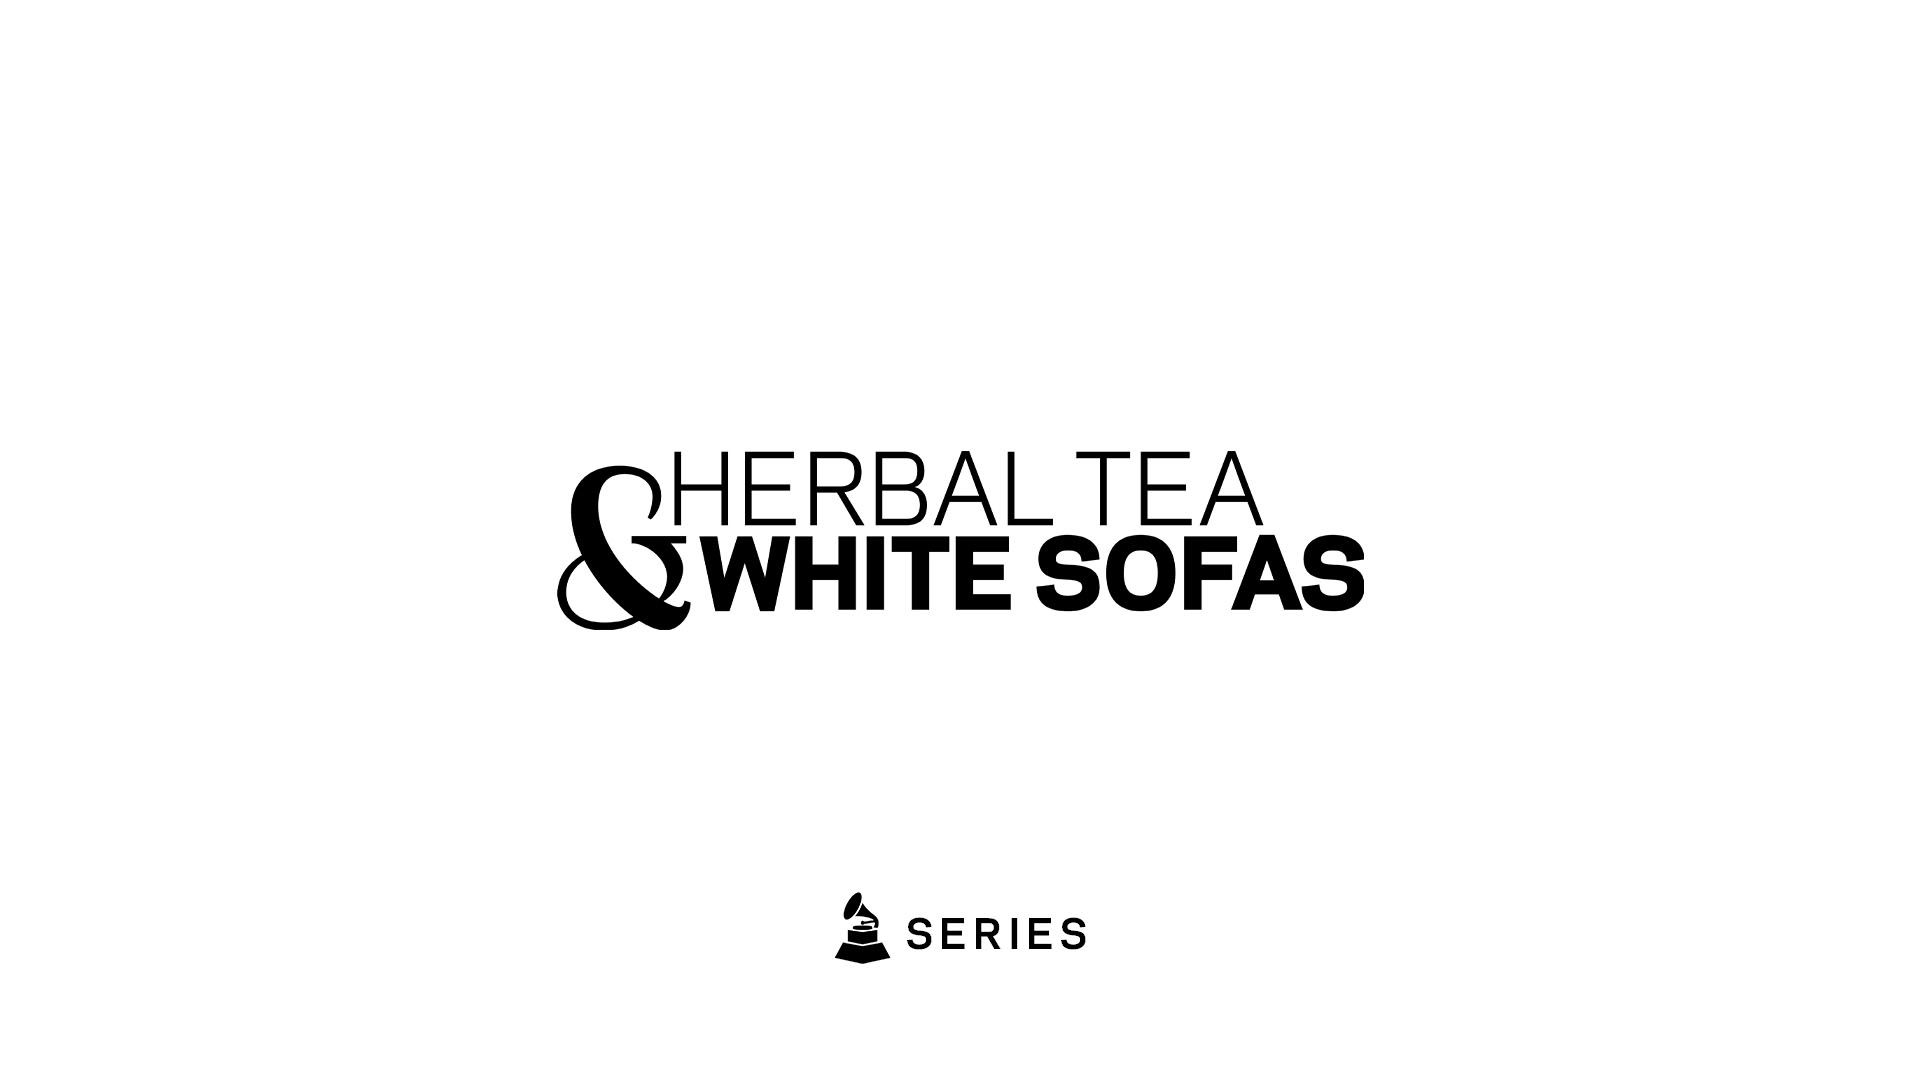 Doug E. Fresh Goes Cuckoo For Coconuts | Herbal Tea & White Sofas